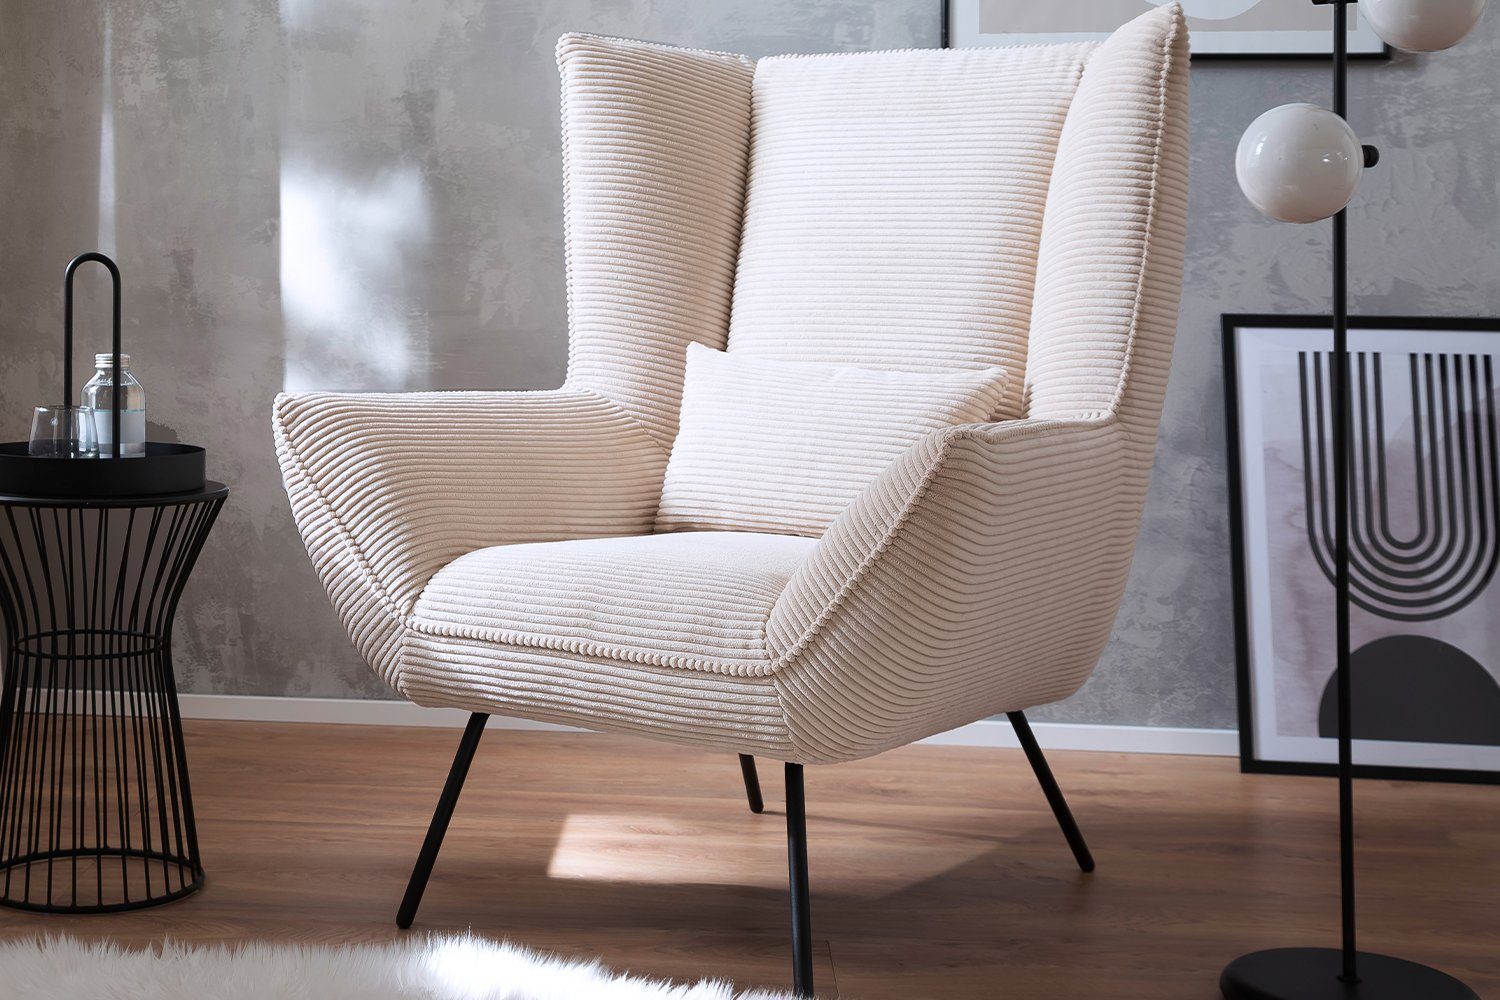 KAWOLA Relaxsessel Cord IVA, versch. Farben Sessel cremeweiß